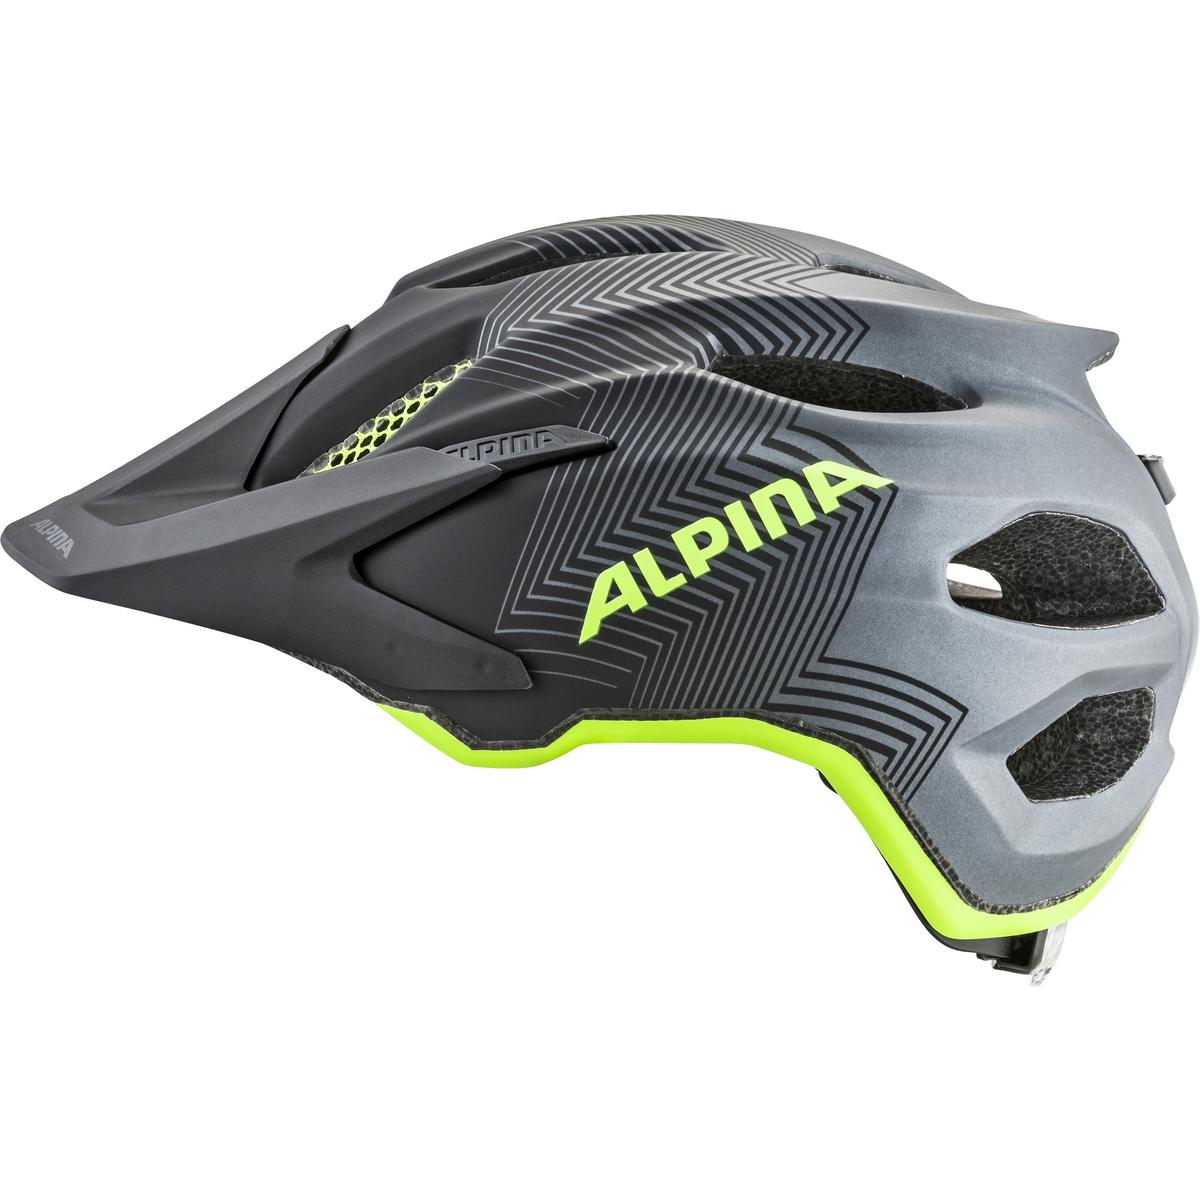 Alpina - Carapax JR. - Garage/Velos-Motos Allemann